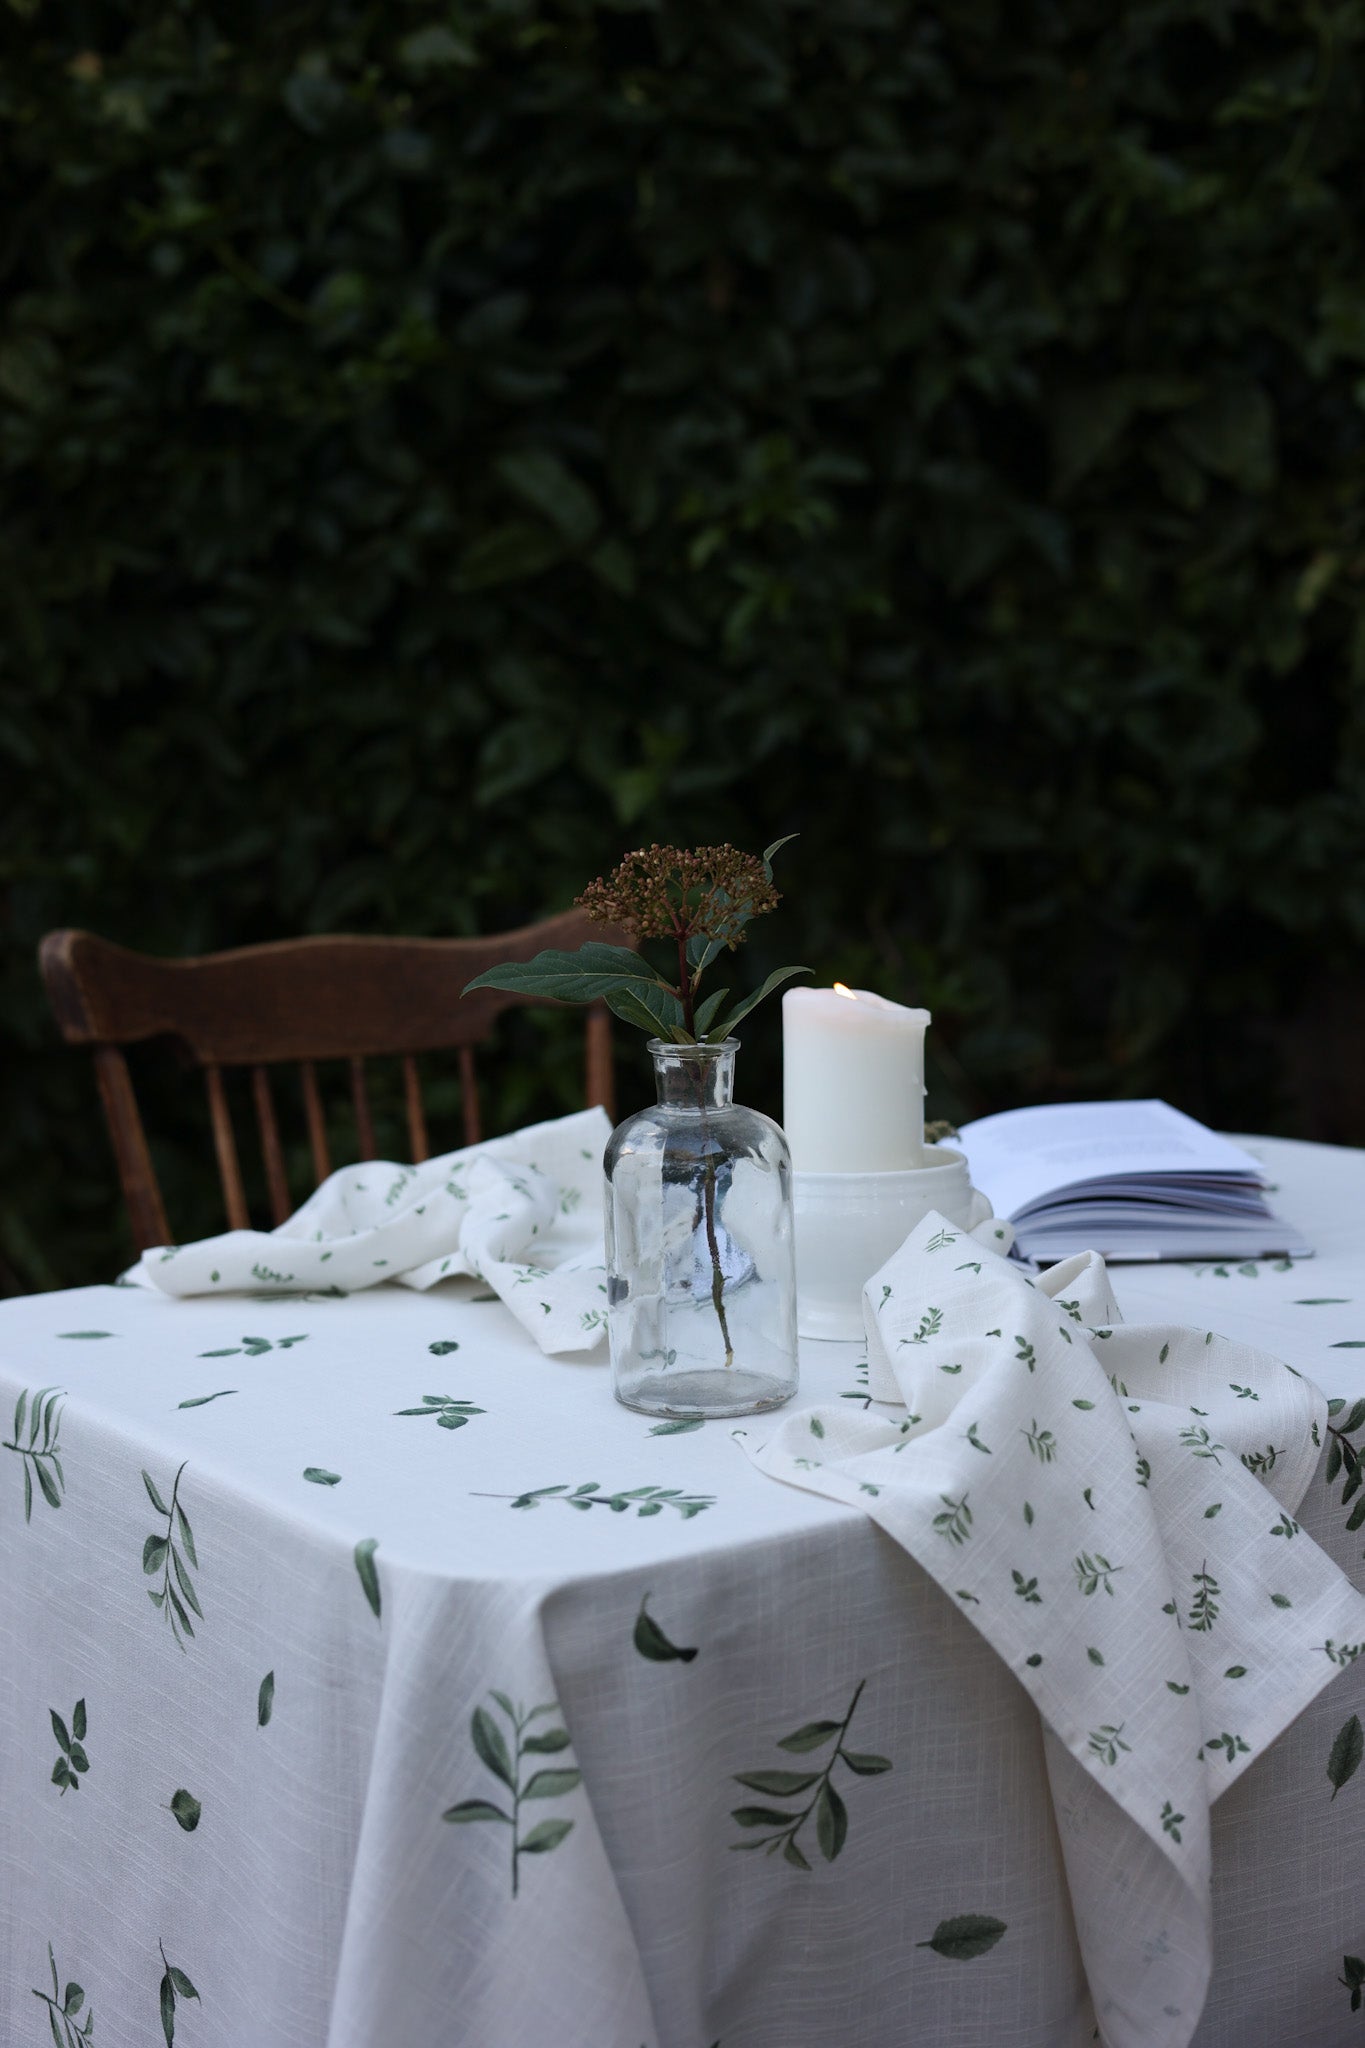 Leaf fringed table cloth